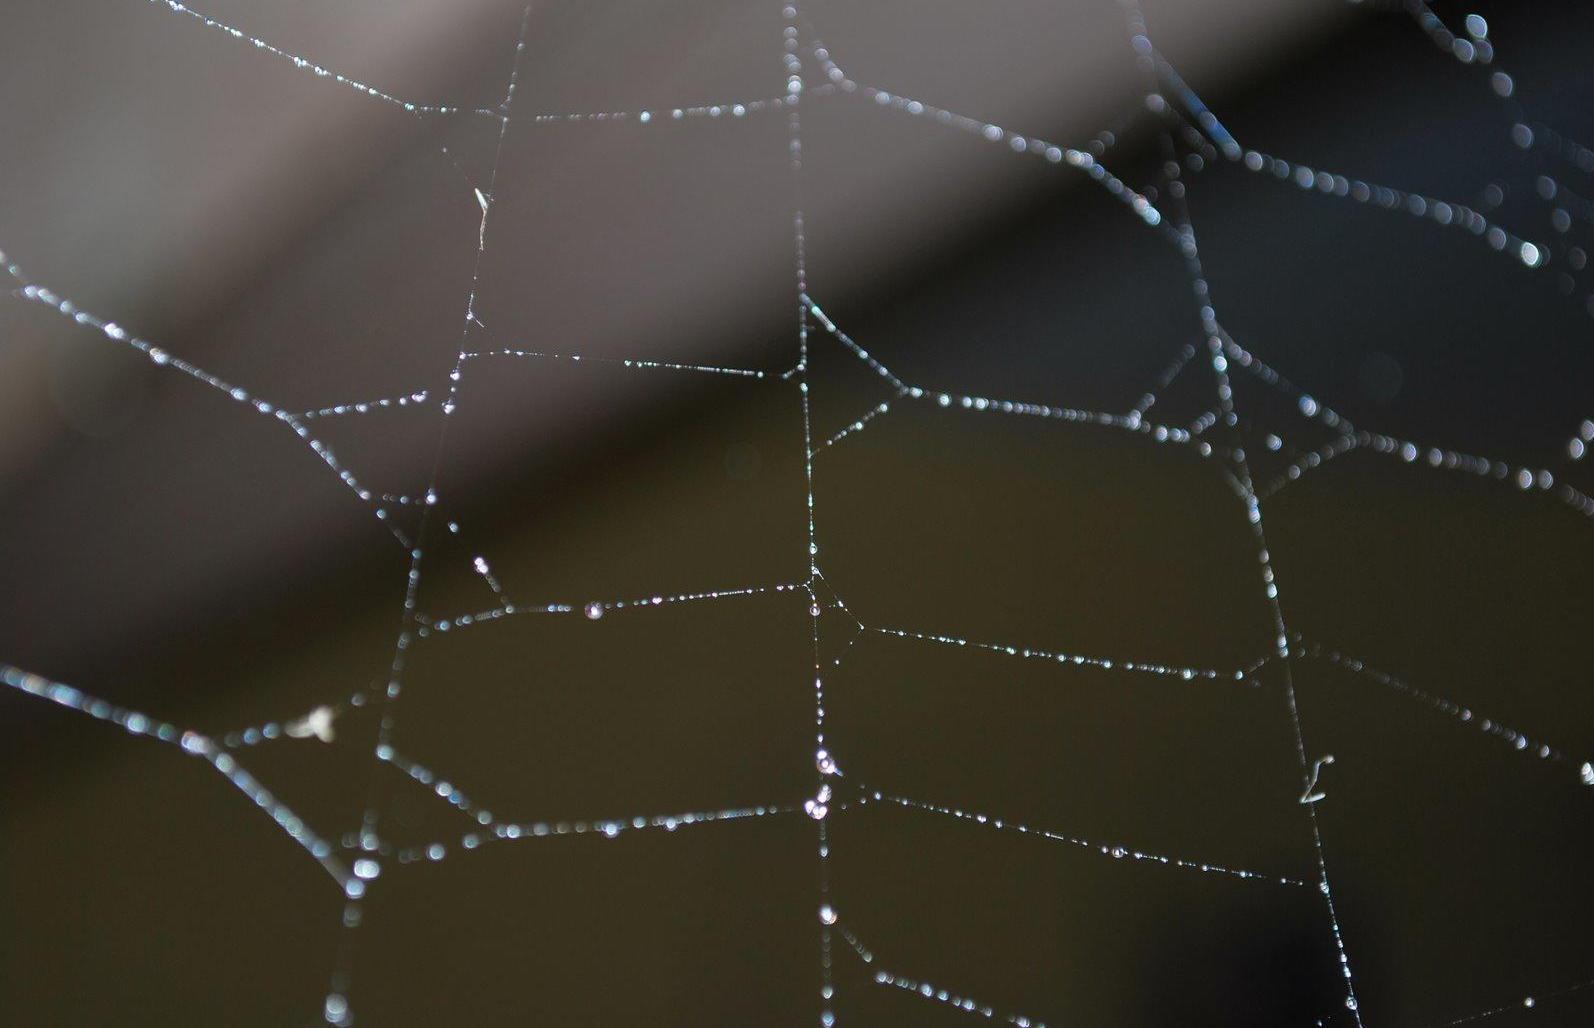 Spider web wallpaper free desktop background wallpaper image